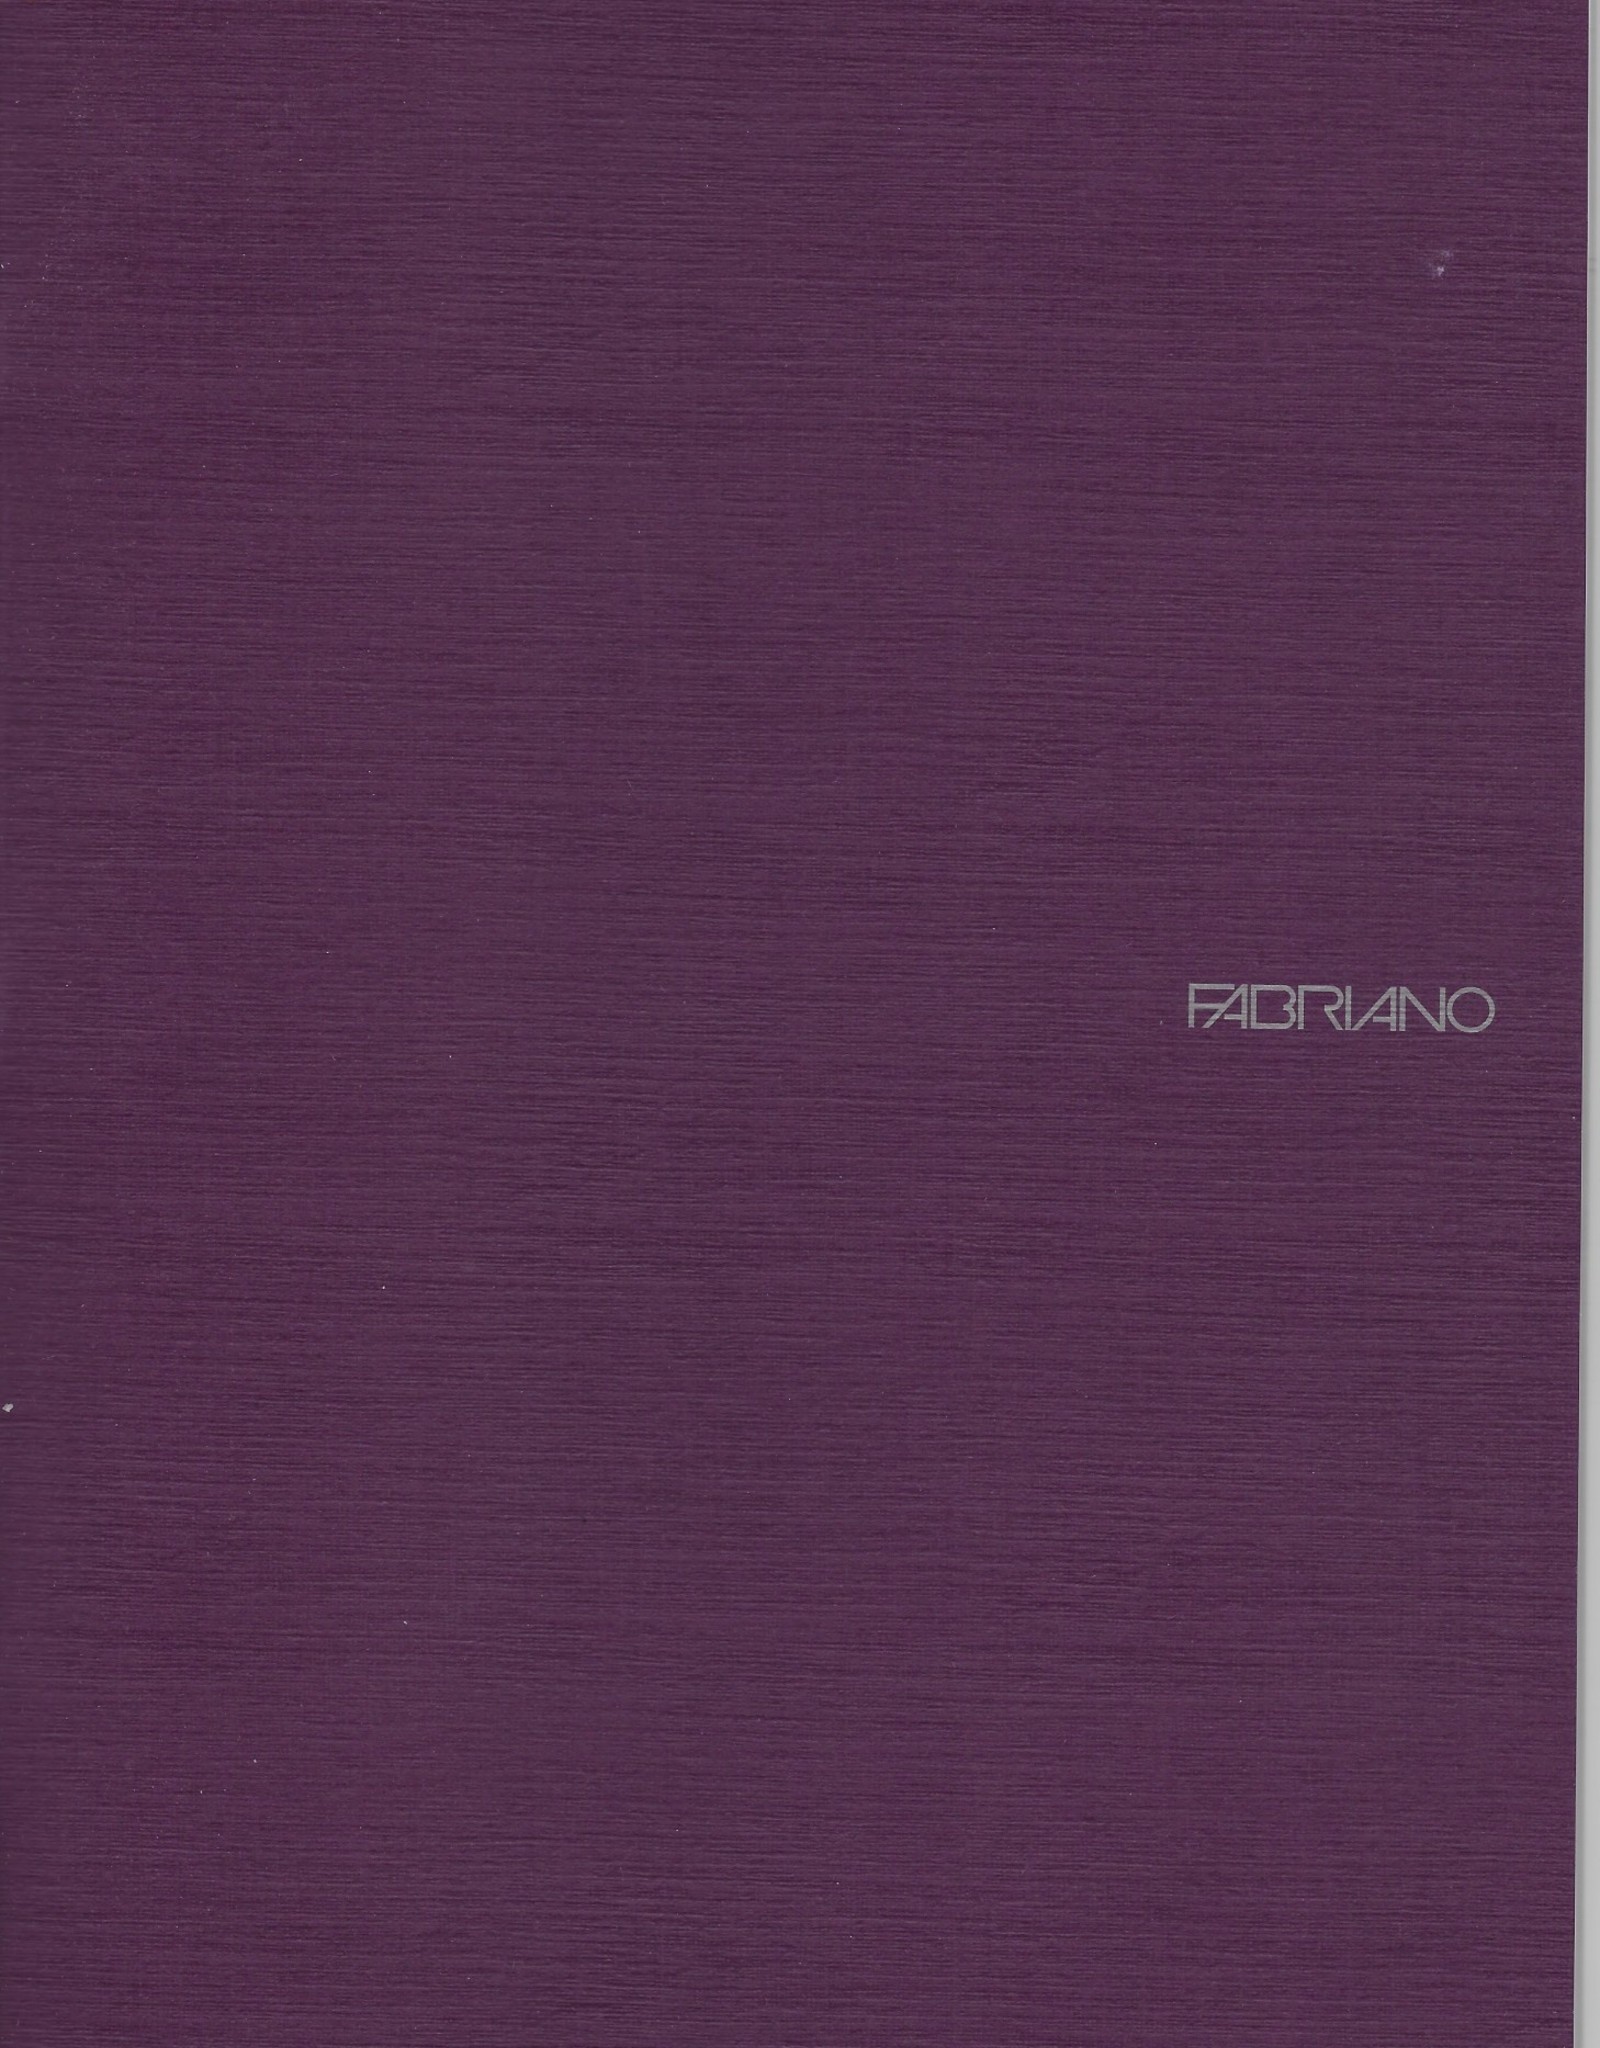 Fabriano EcoQua Blank Notebook, Wine, 8.25" x 11.5” 40 Sheets